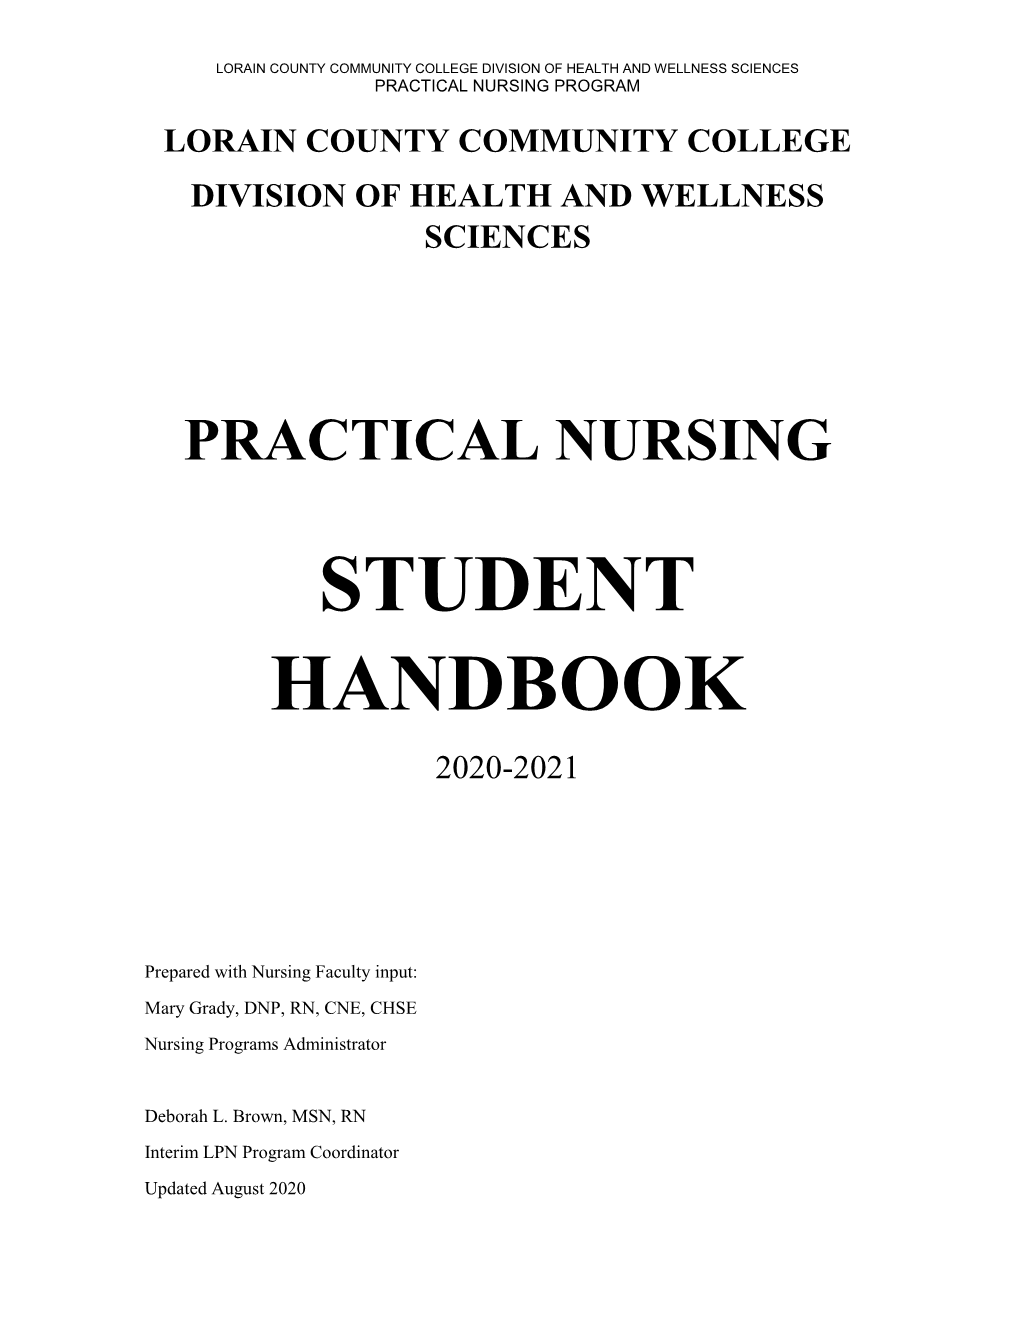 Practical Nursing Student Handbook 2020-2021